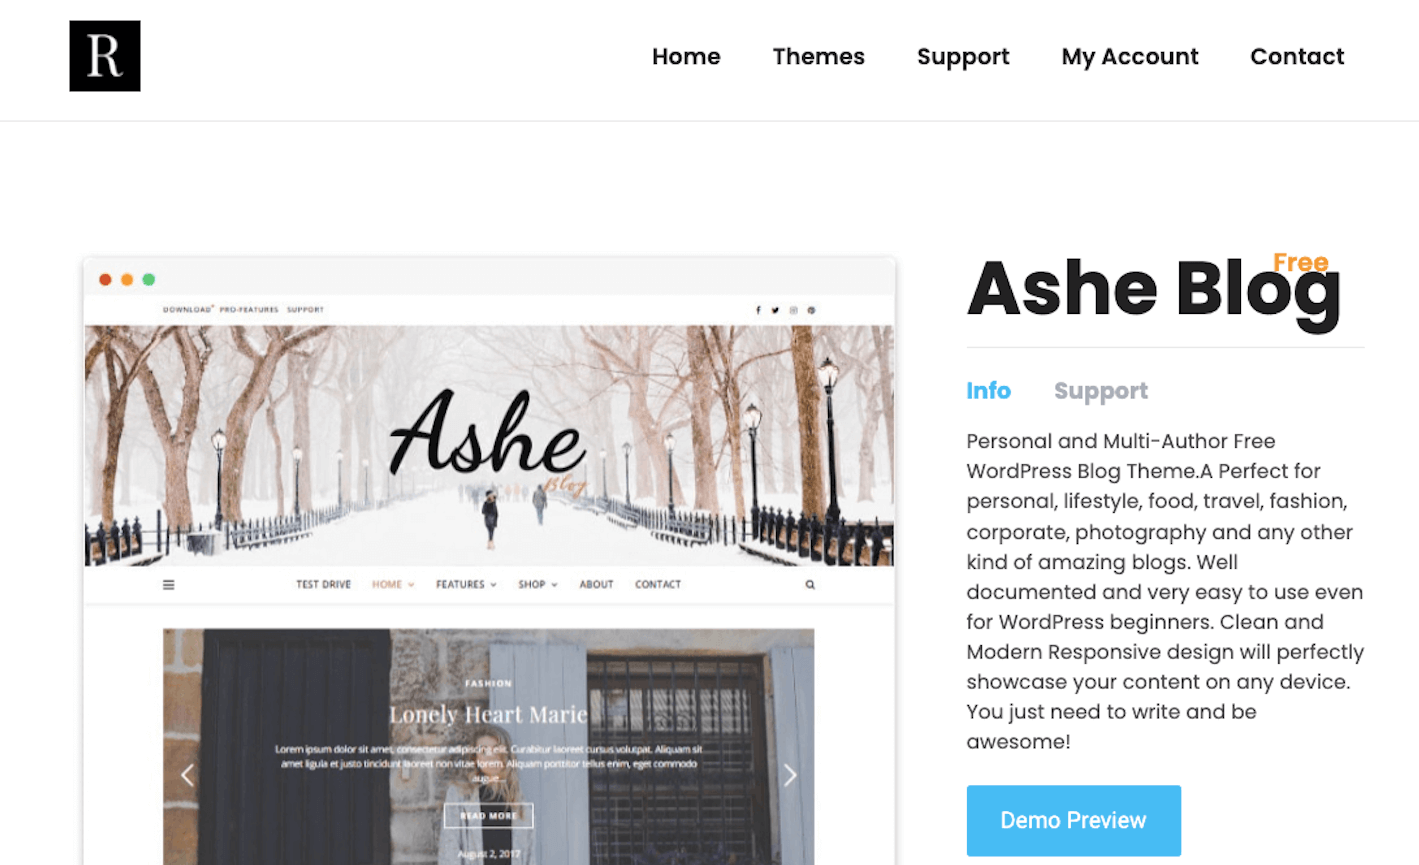 Ashe WordPress theme